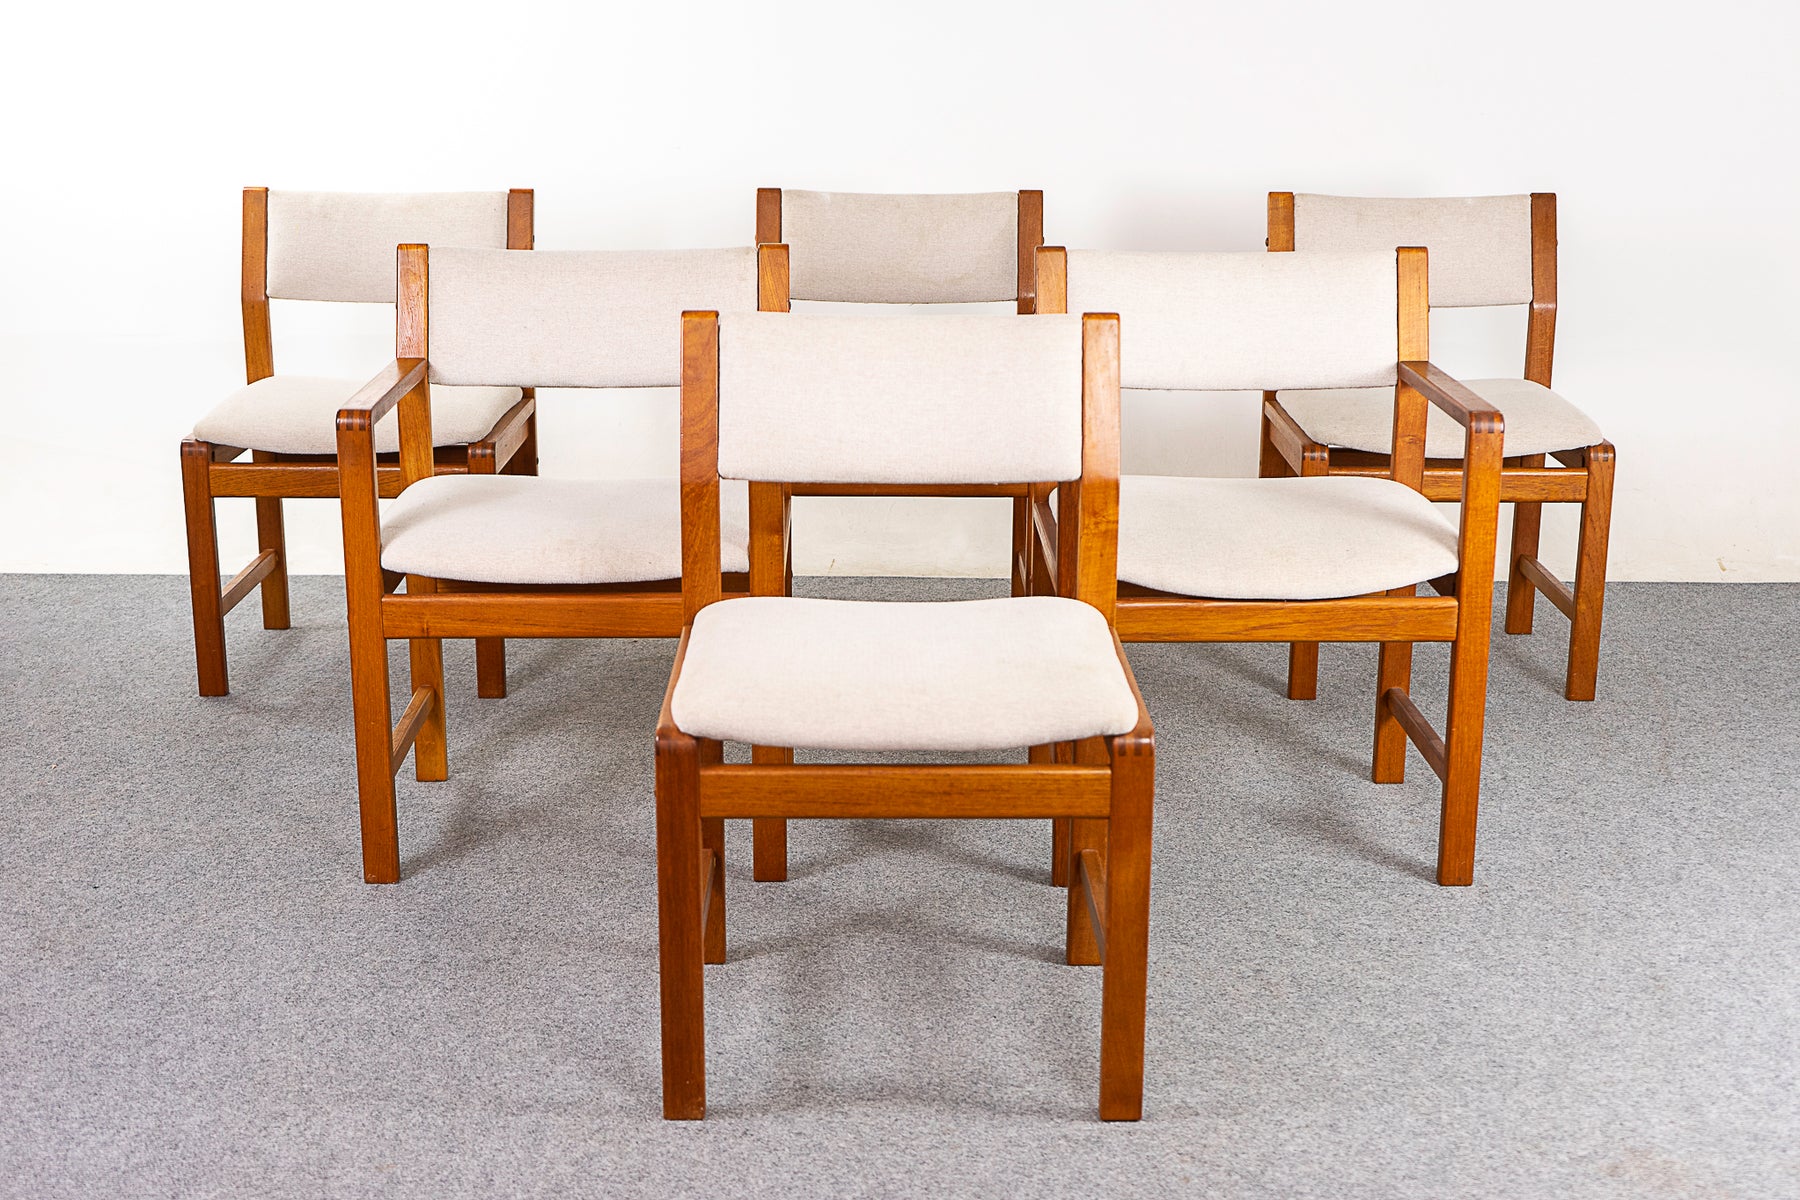 6 Teak Dining Chairs - (D1080)